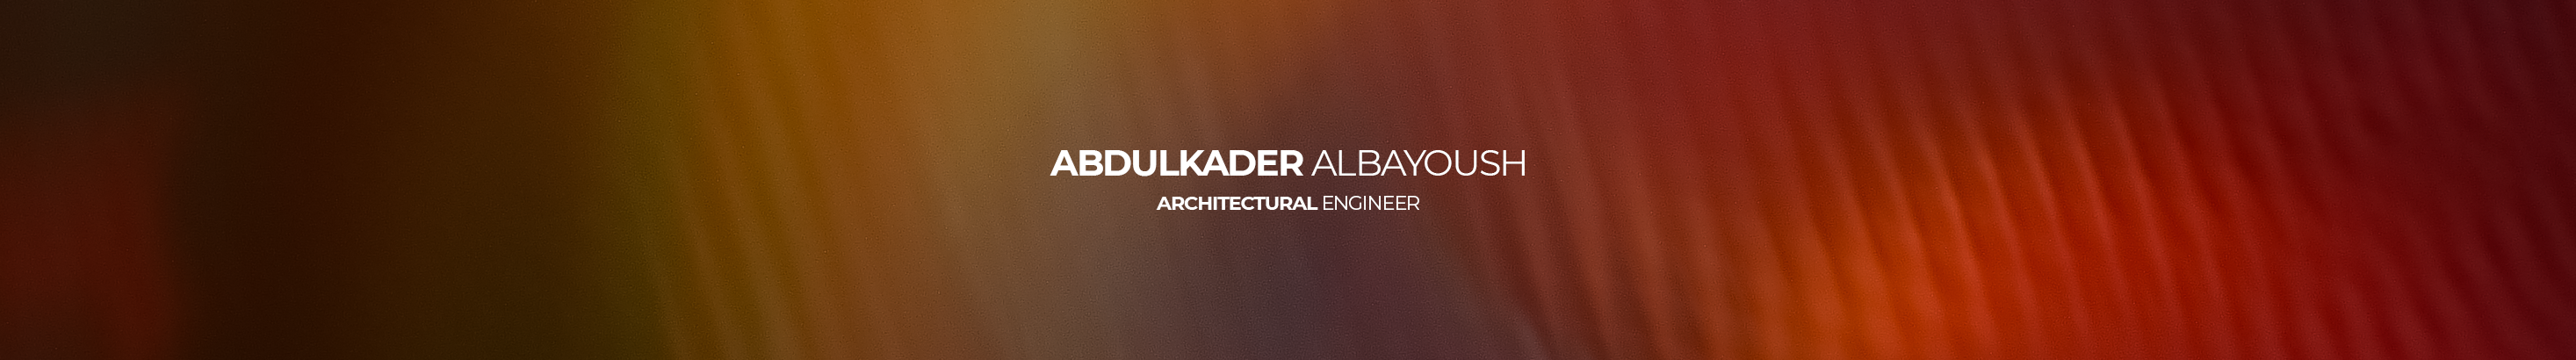 Abdulkader Al-Bayoush's profile banner